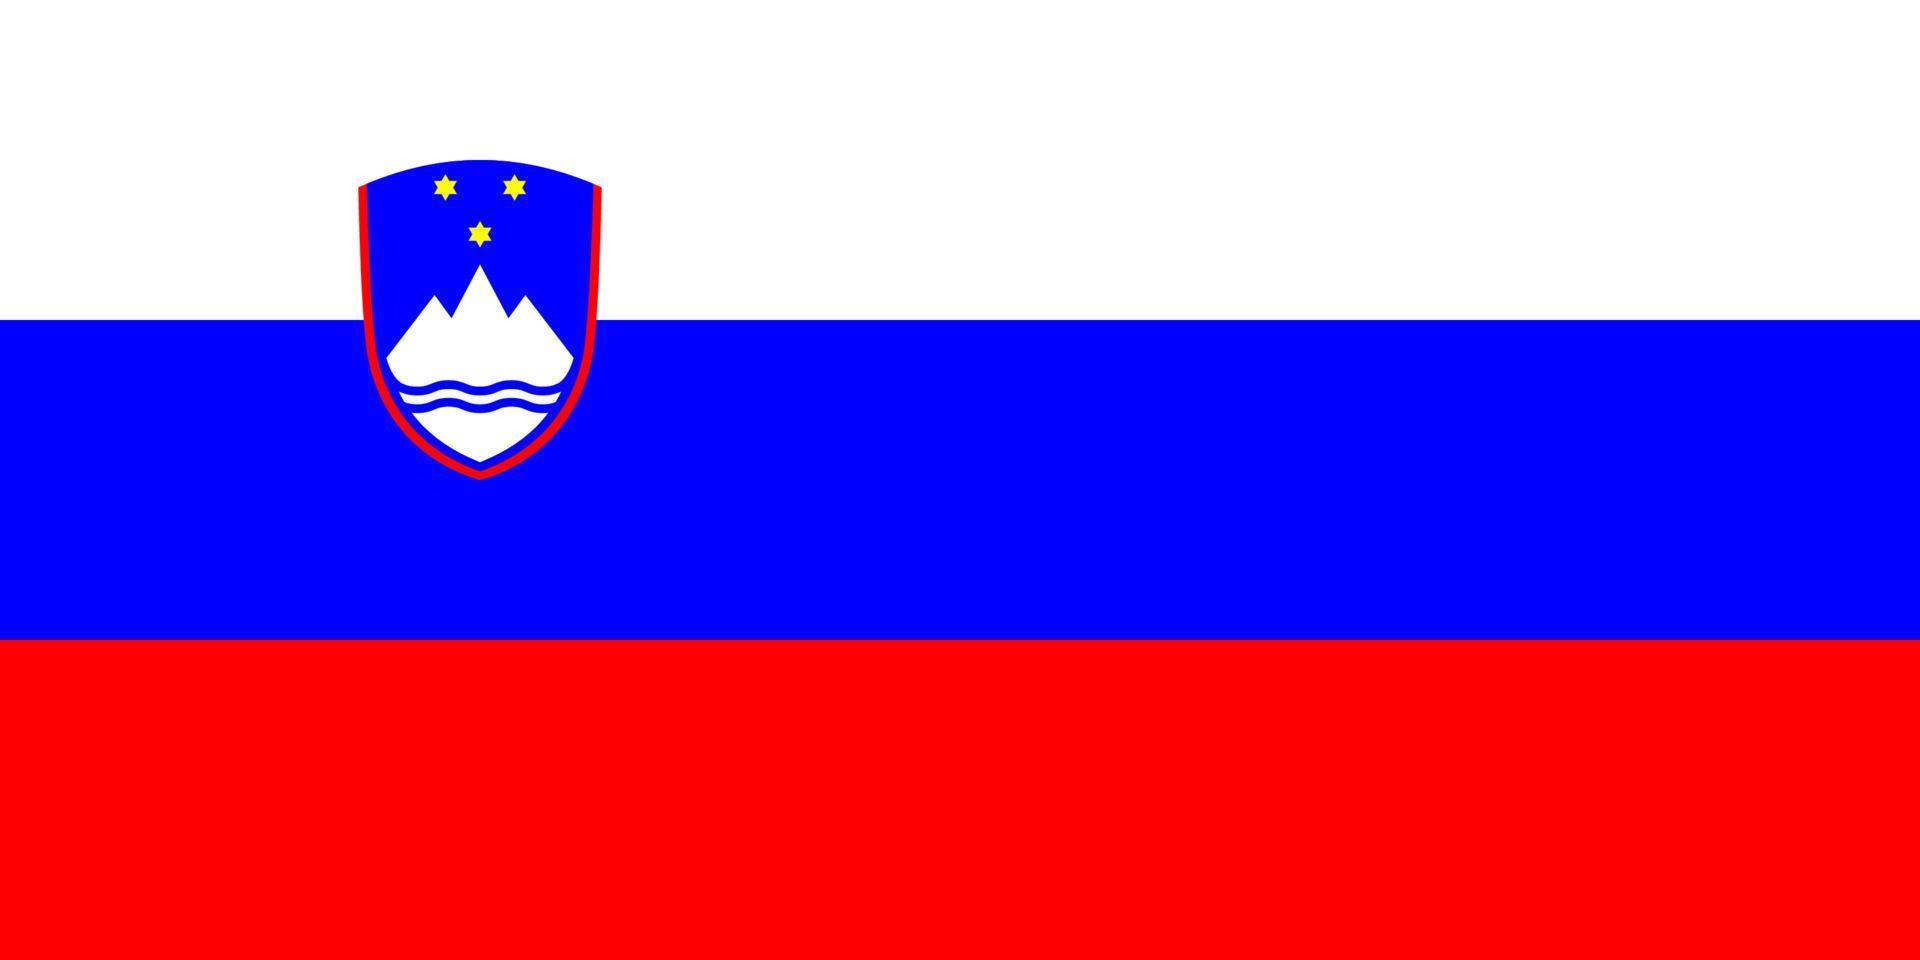 Flat Illustration of Slovenia flag vector